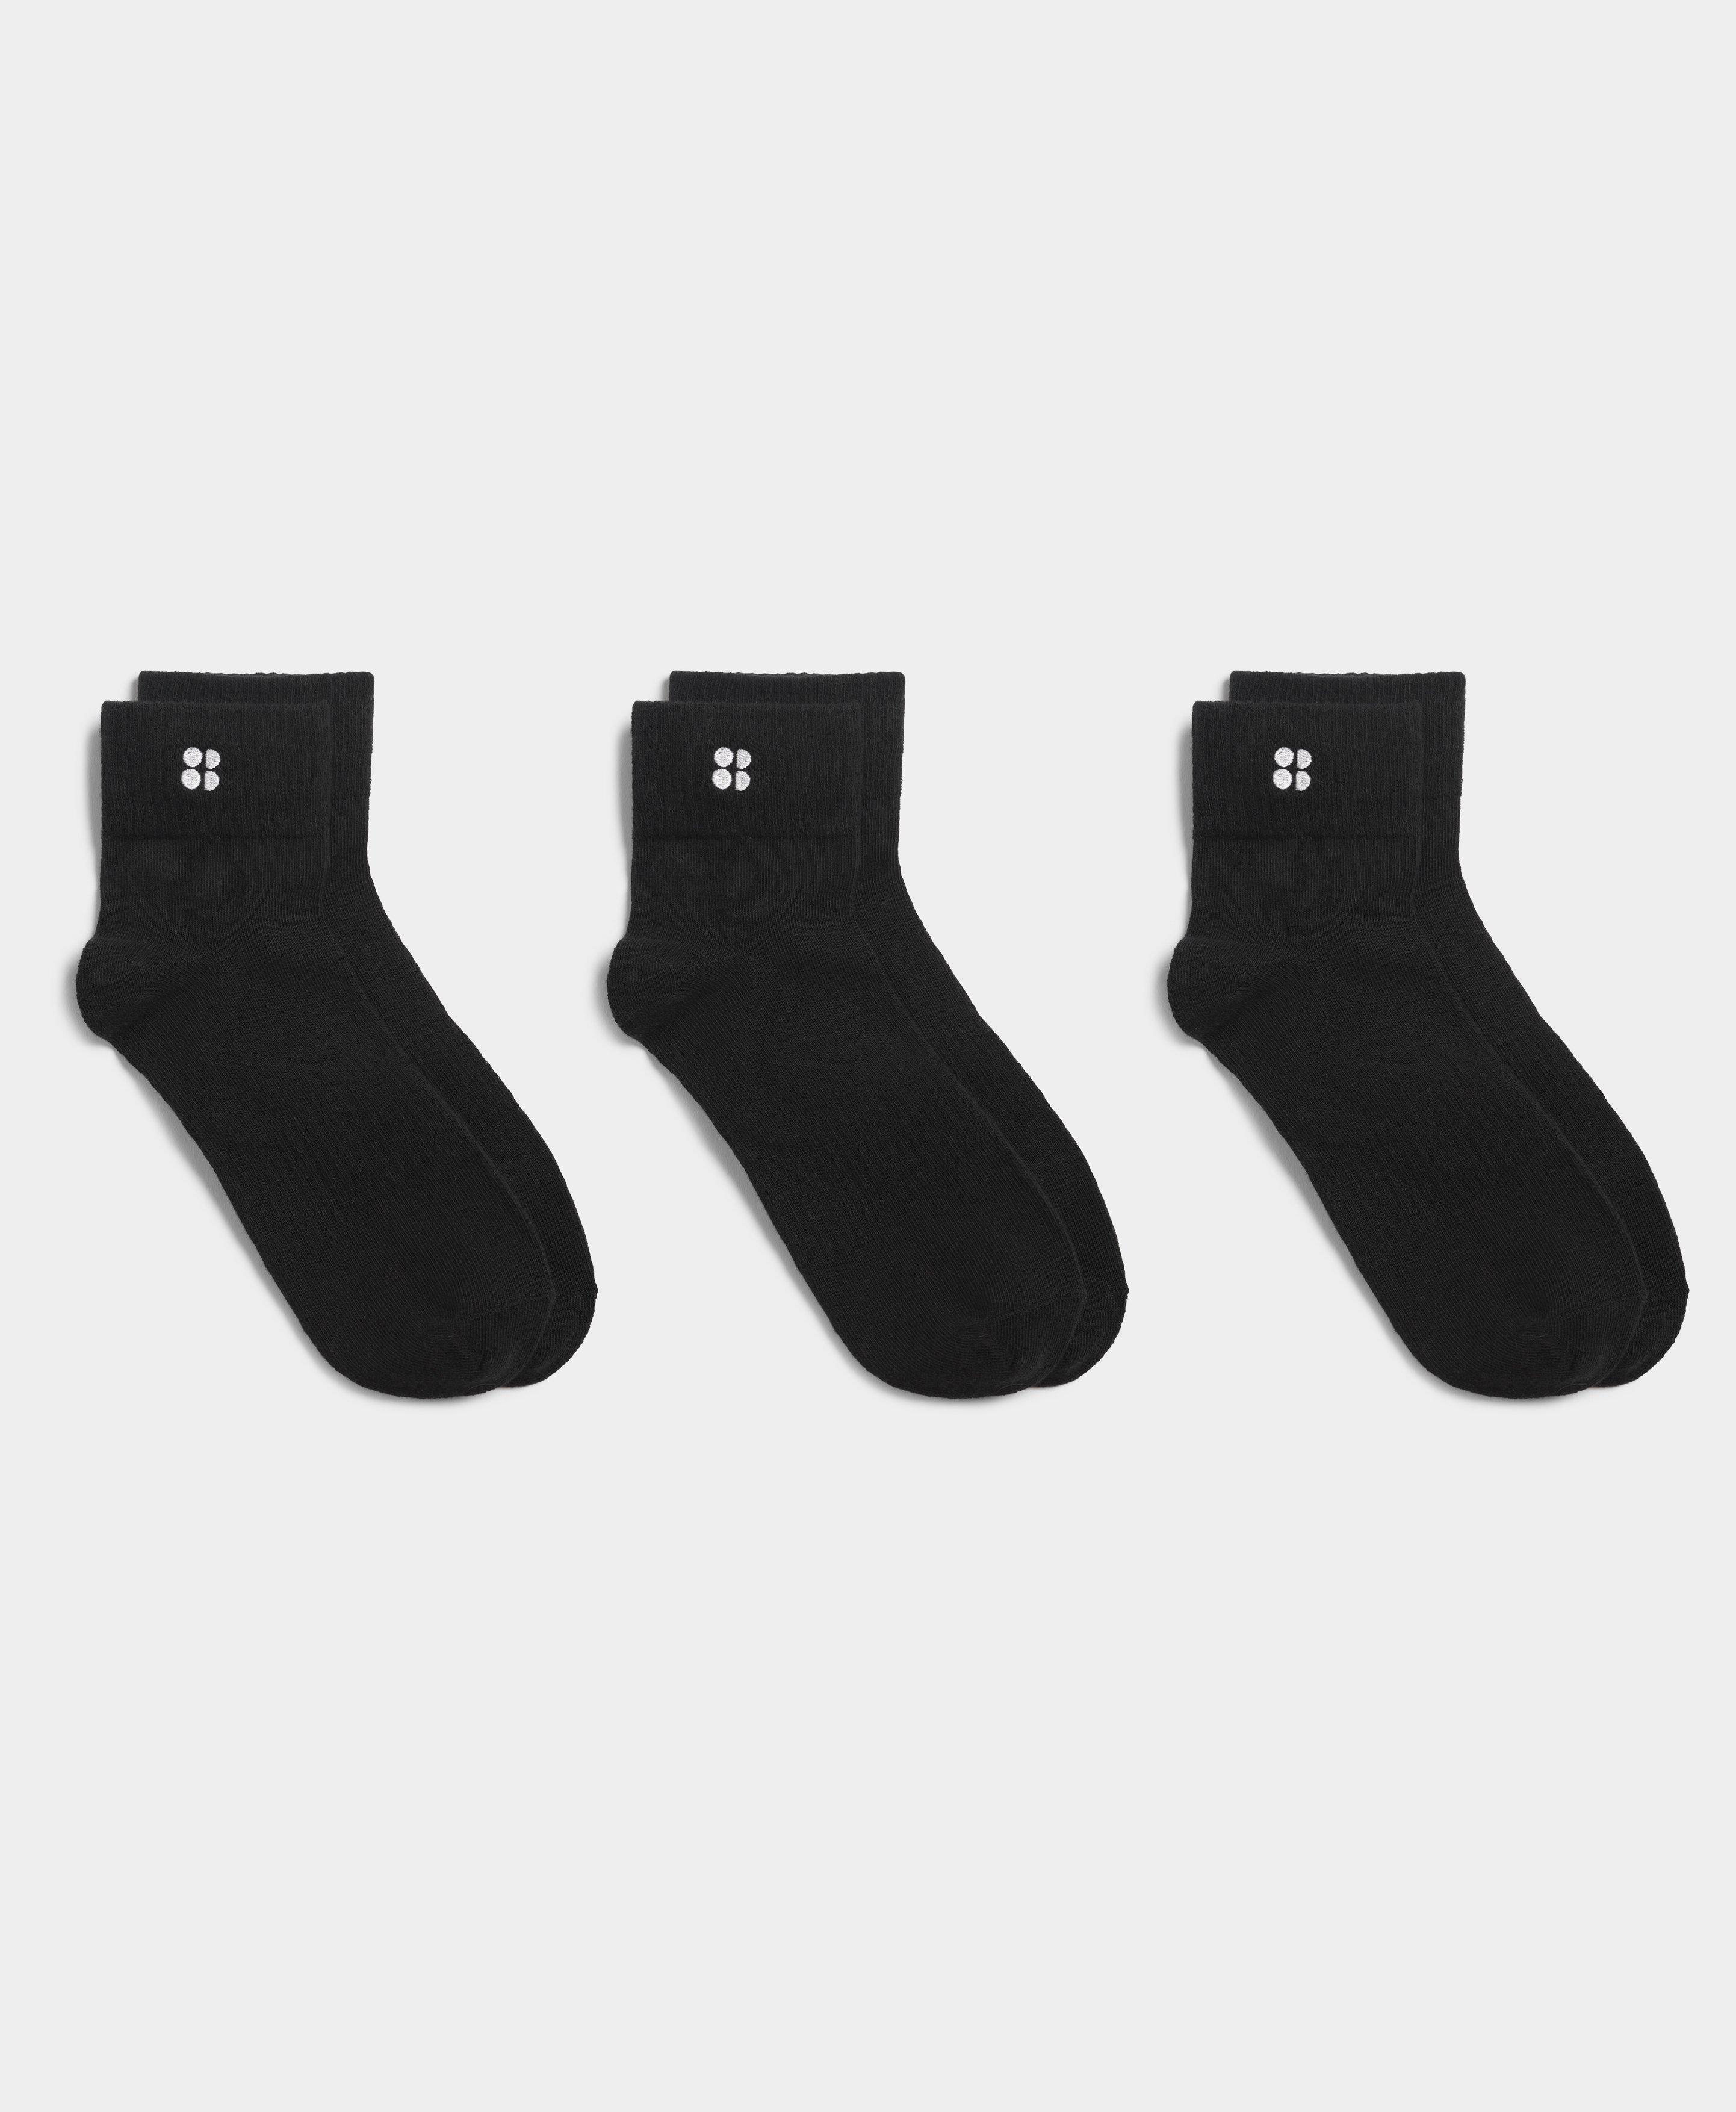 Sweaty Betty Barre Grip Socks, Pack of 2, Spring Green/White, 2.5-5